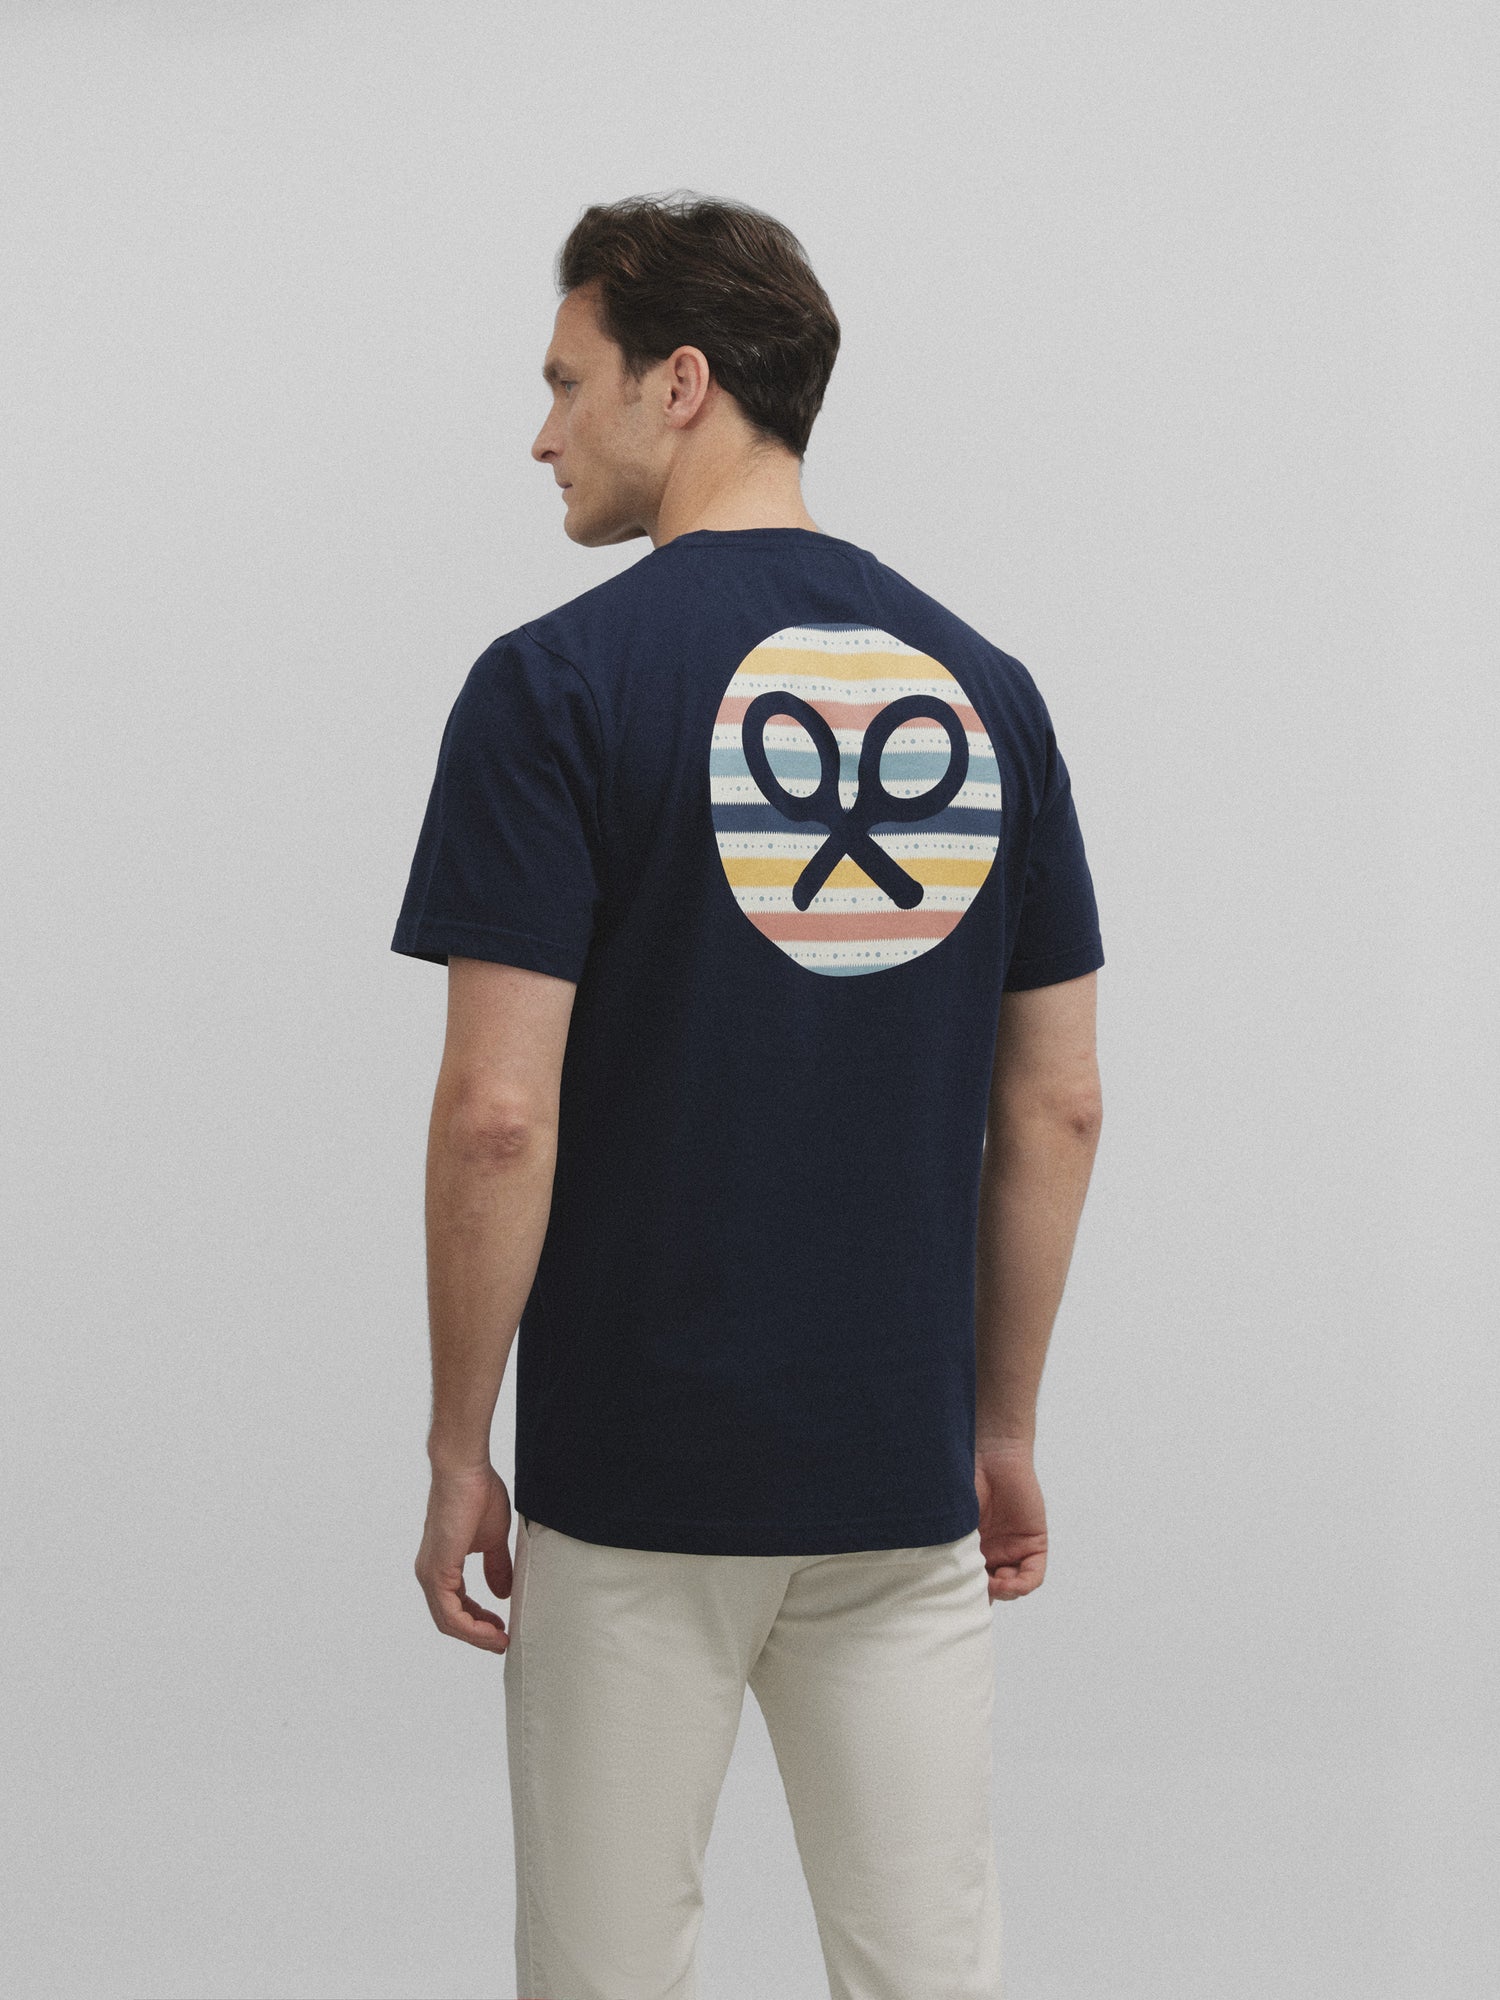 Navy blue ethnic logo t-shirt